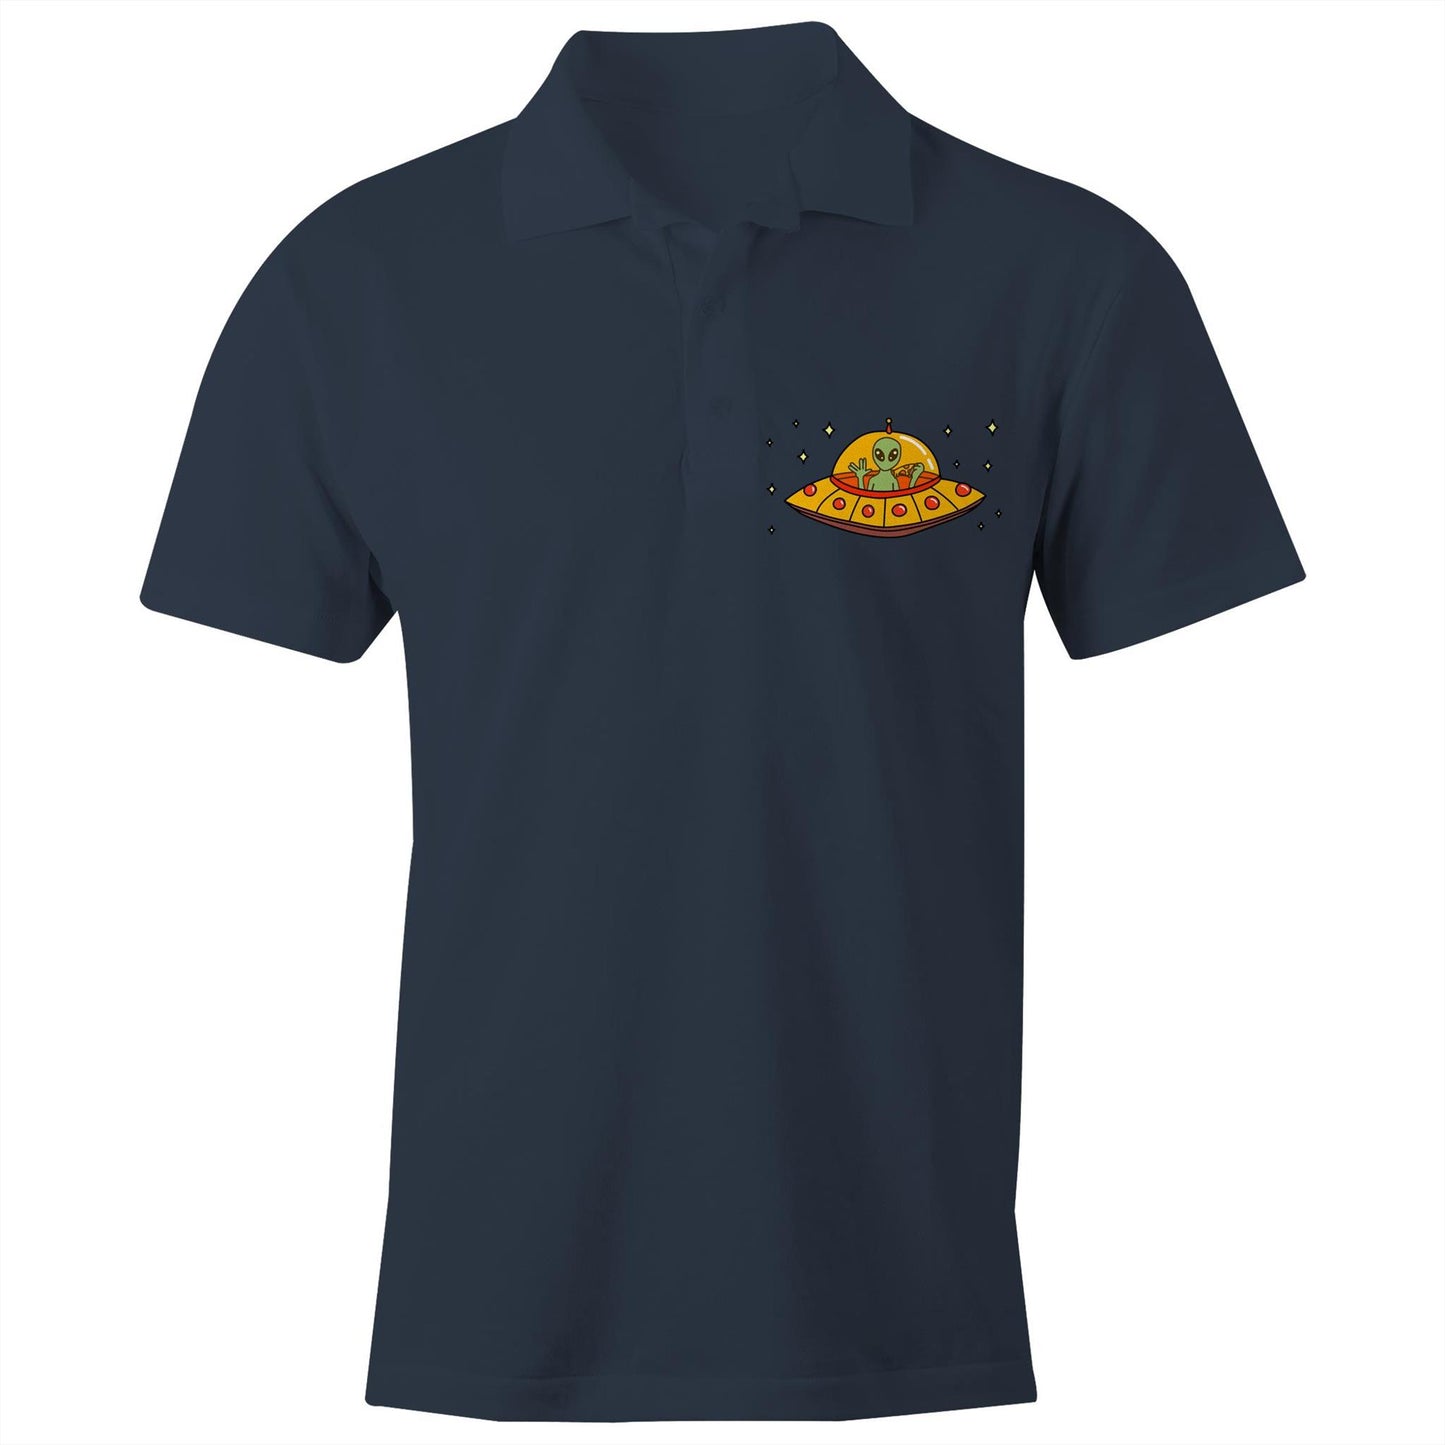 Alien Pizza - Chad S/S Polo Shirt, Printed Navy Polo Shirt Food Sci Fi